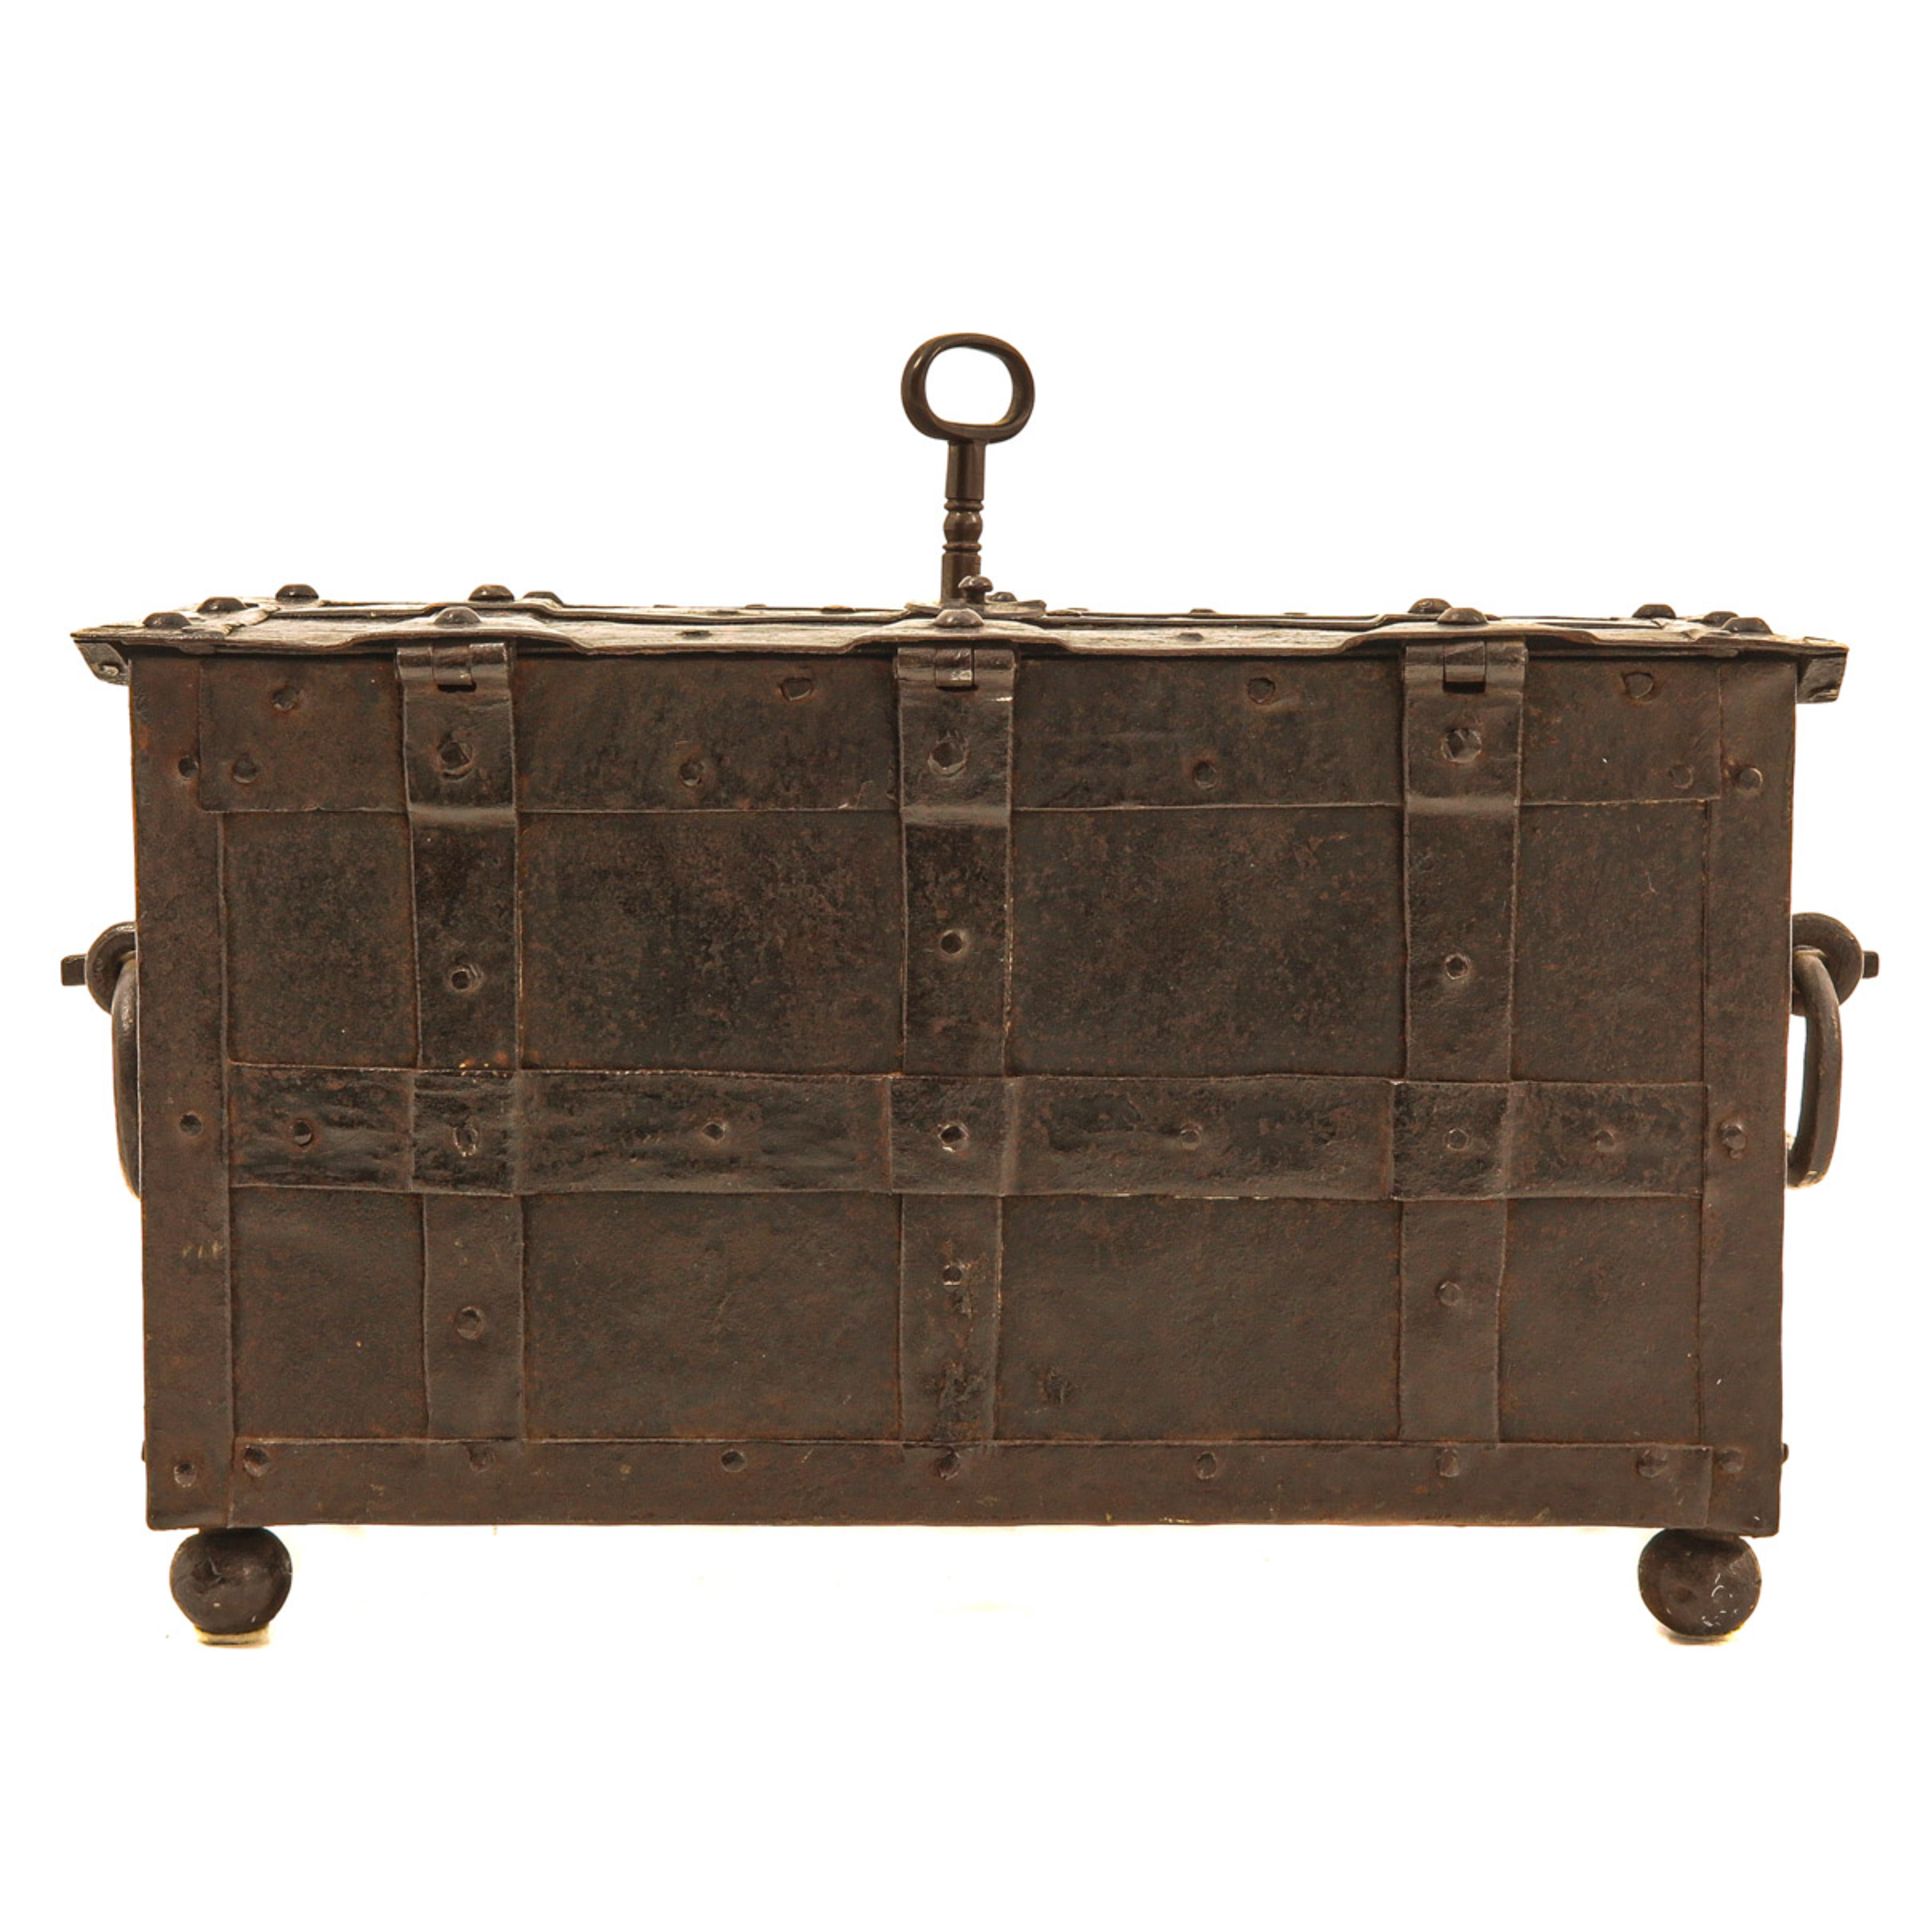 A Rare 17th Century Money Box - Image 3 of 10